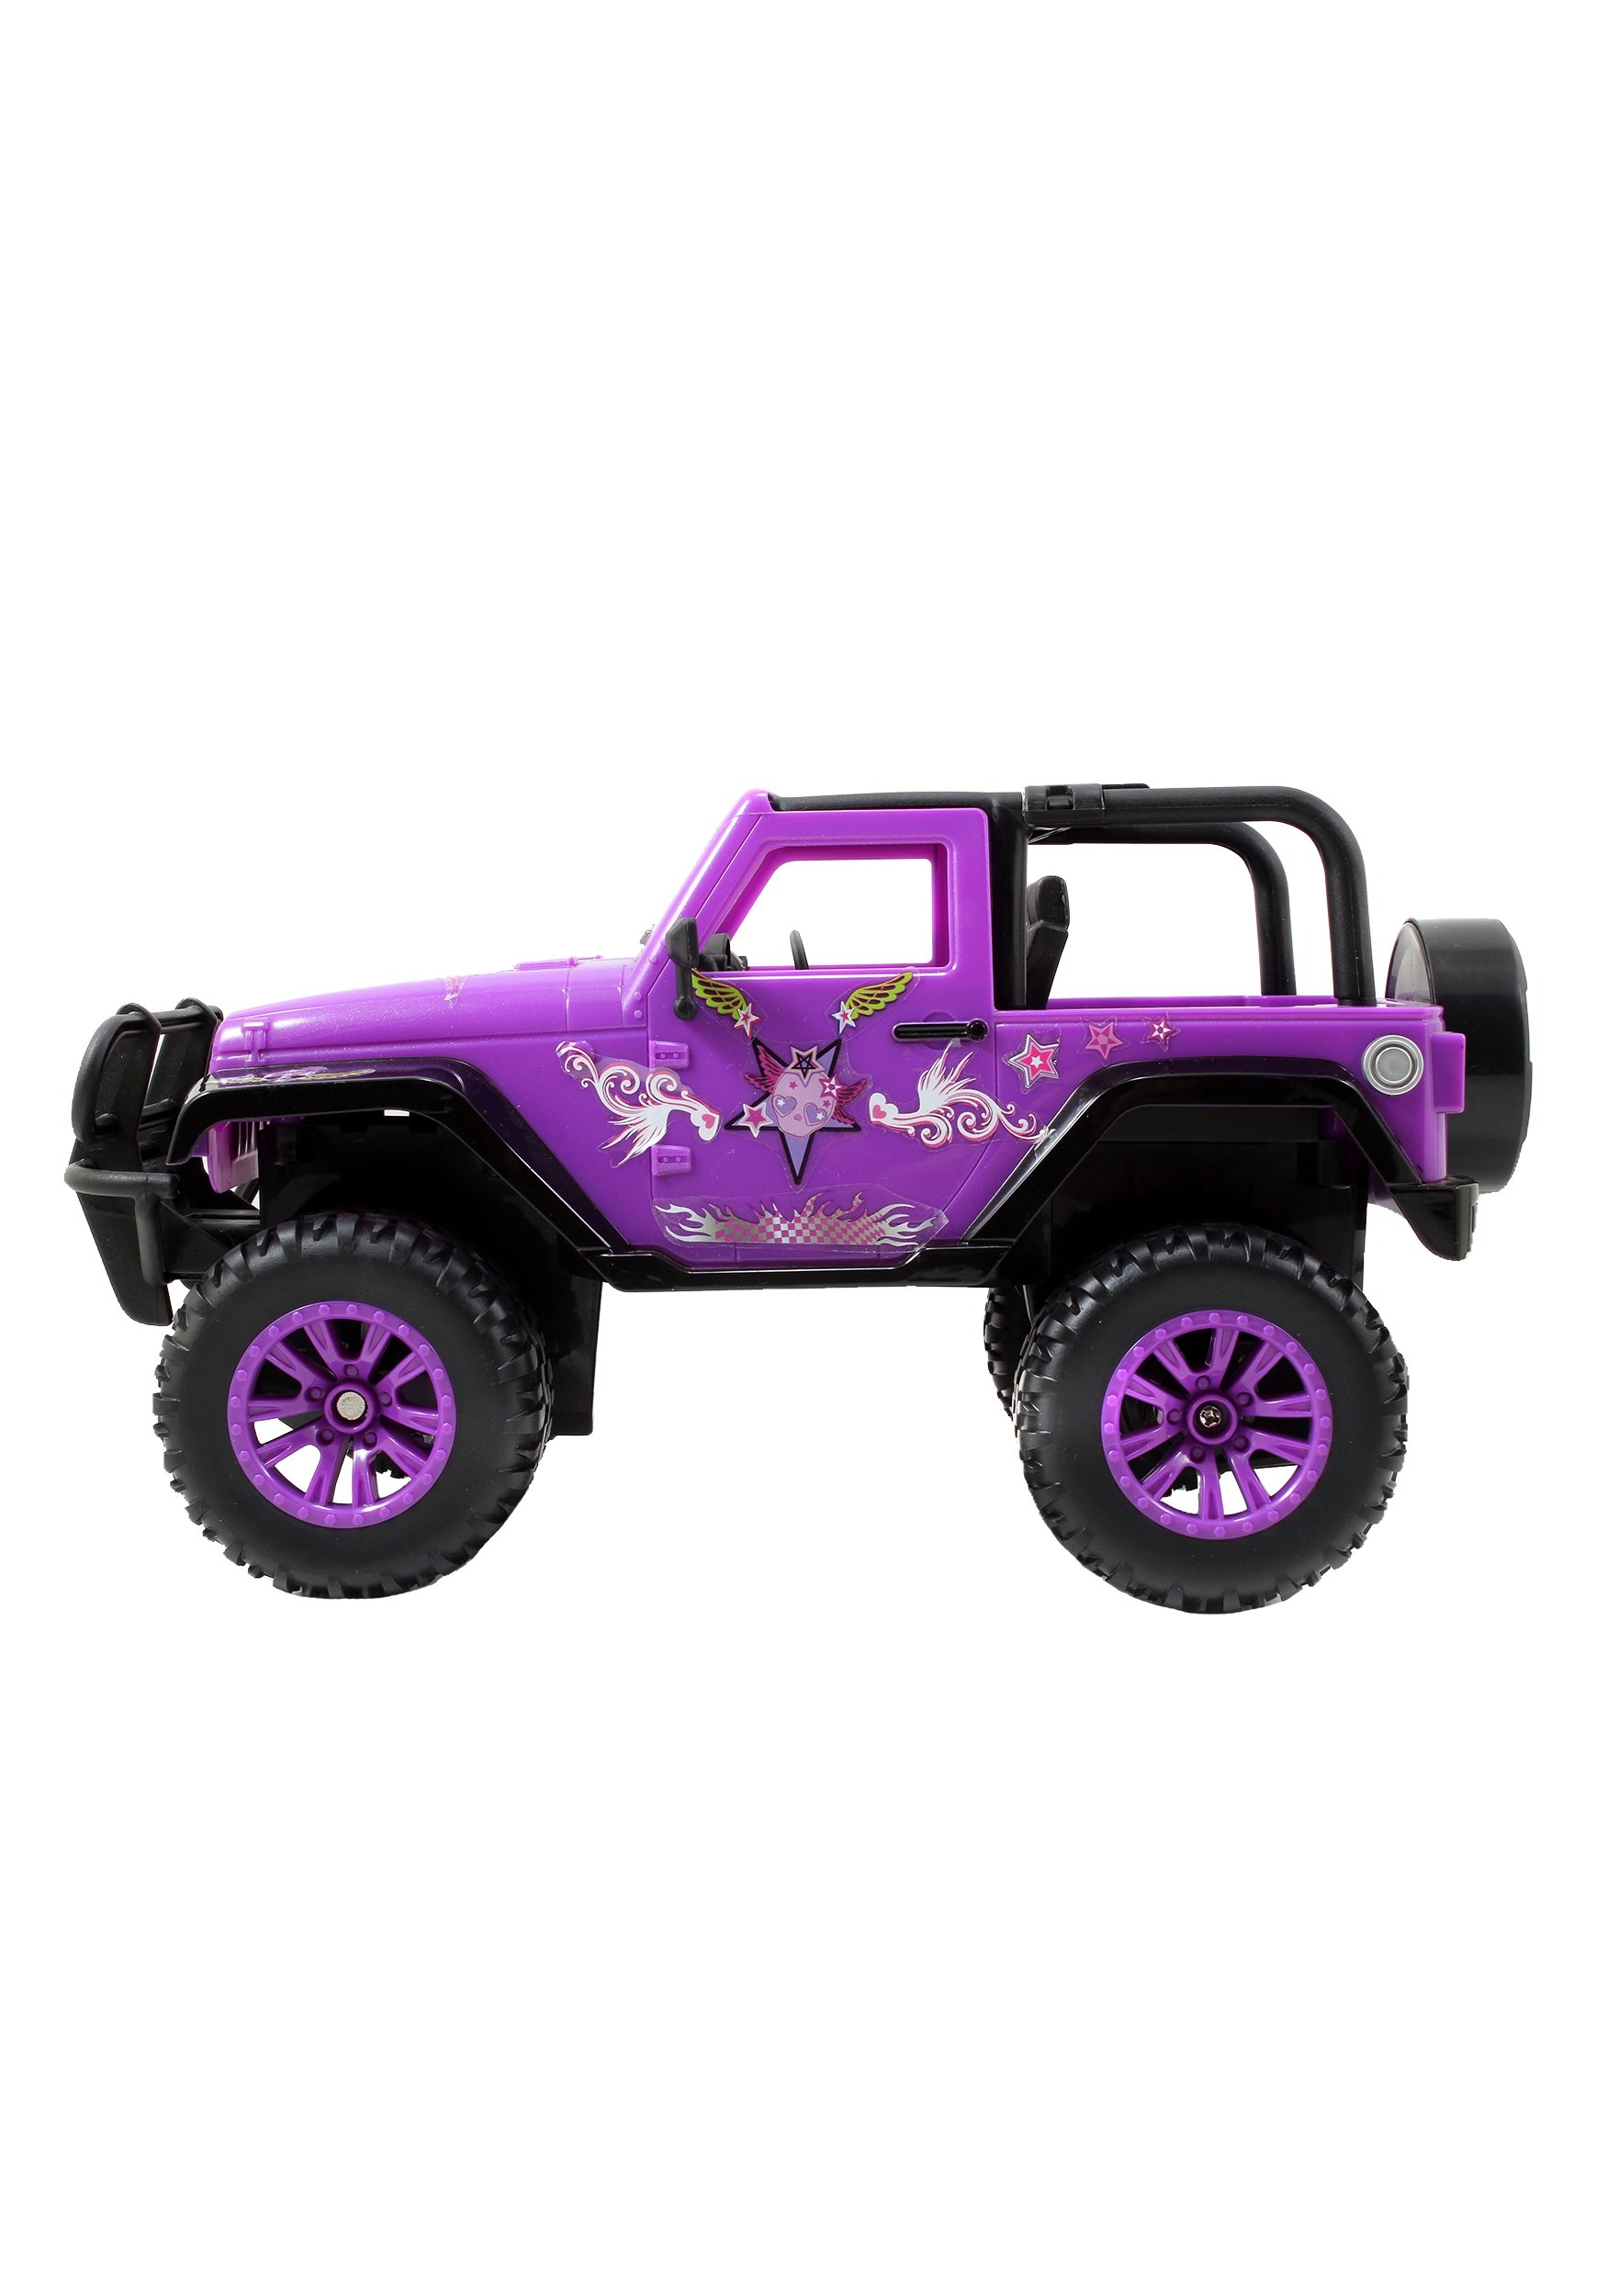 Girlmazing Jeep Wrangler Remote Control Toy Vehicle